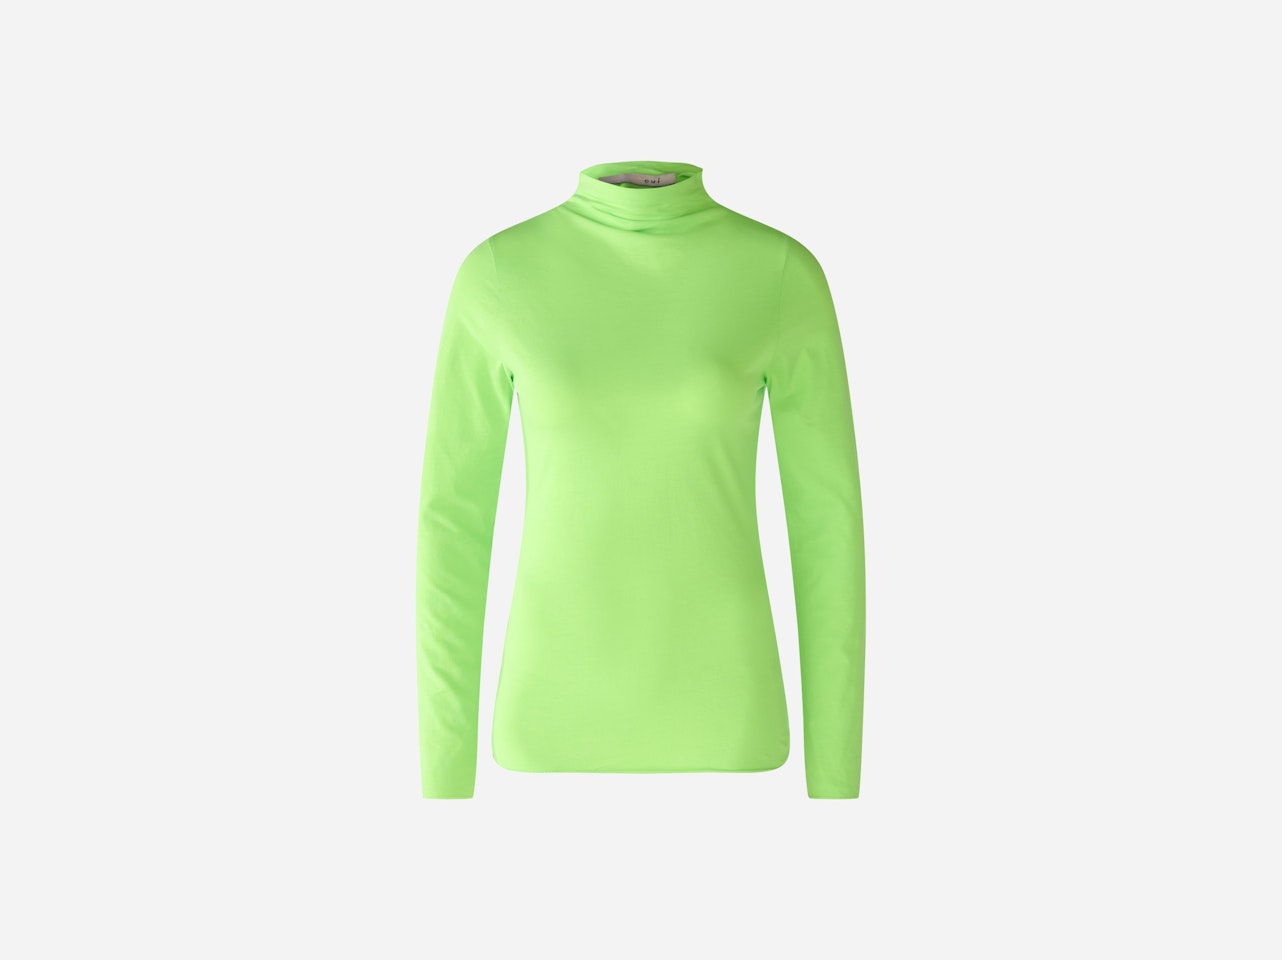 Bild 1 von Long-sleeved shirt 100 % cotton in gecko green | Oui